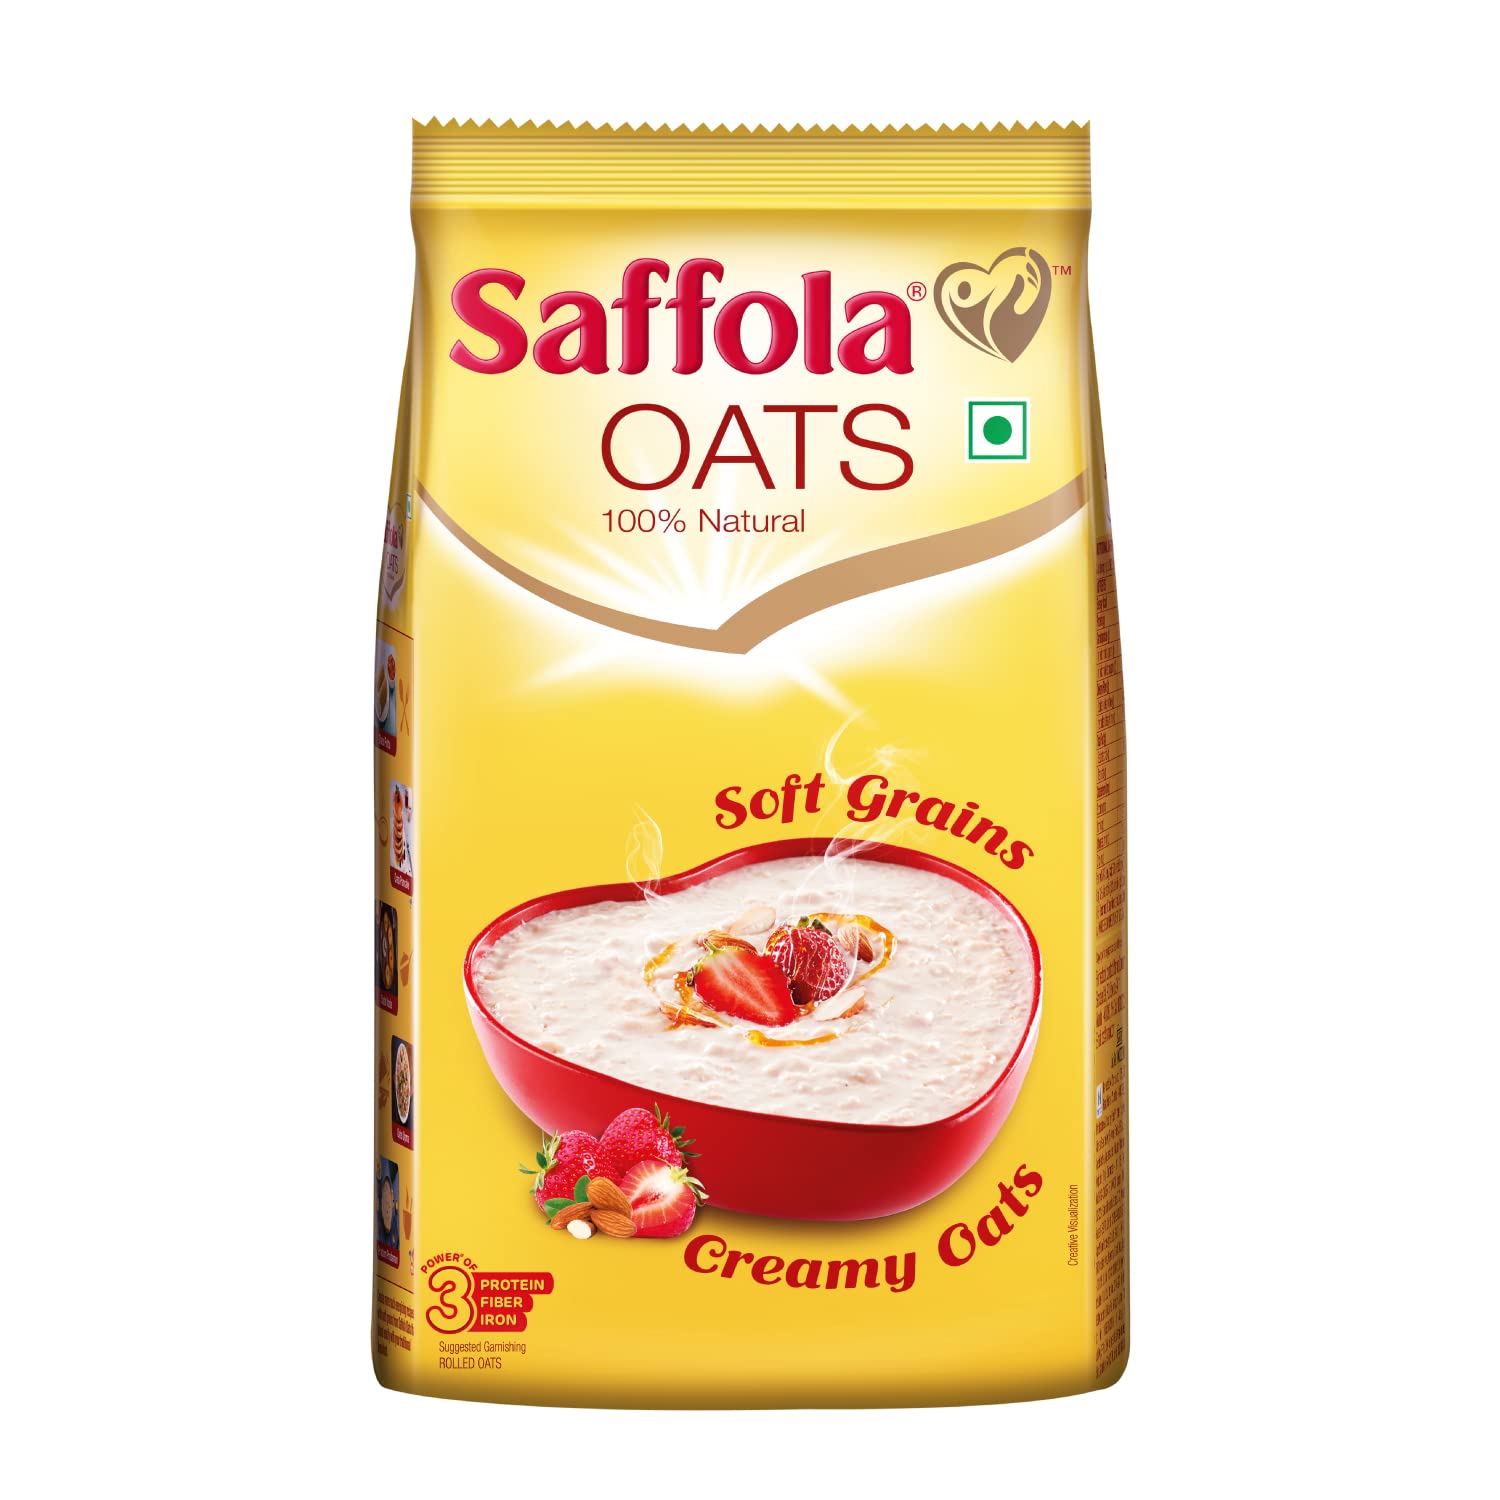 Saffola soft grains creamy oats 1 Kg